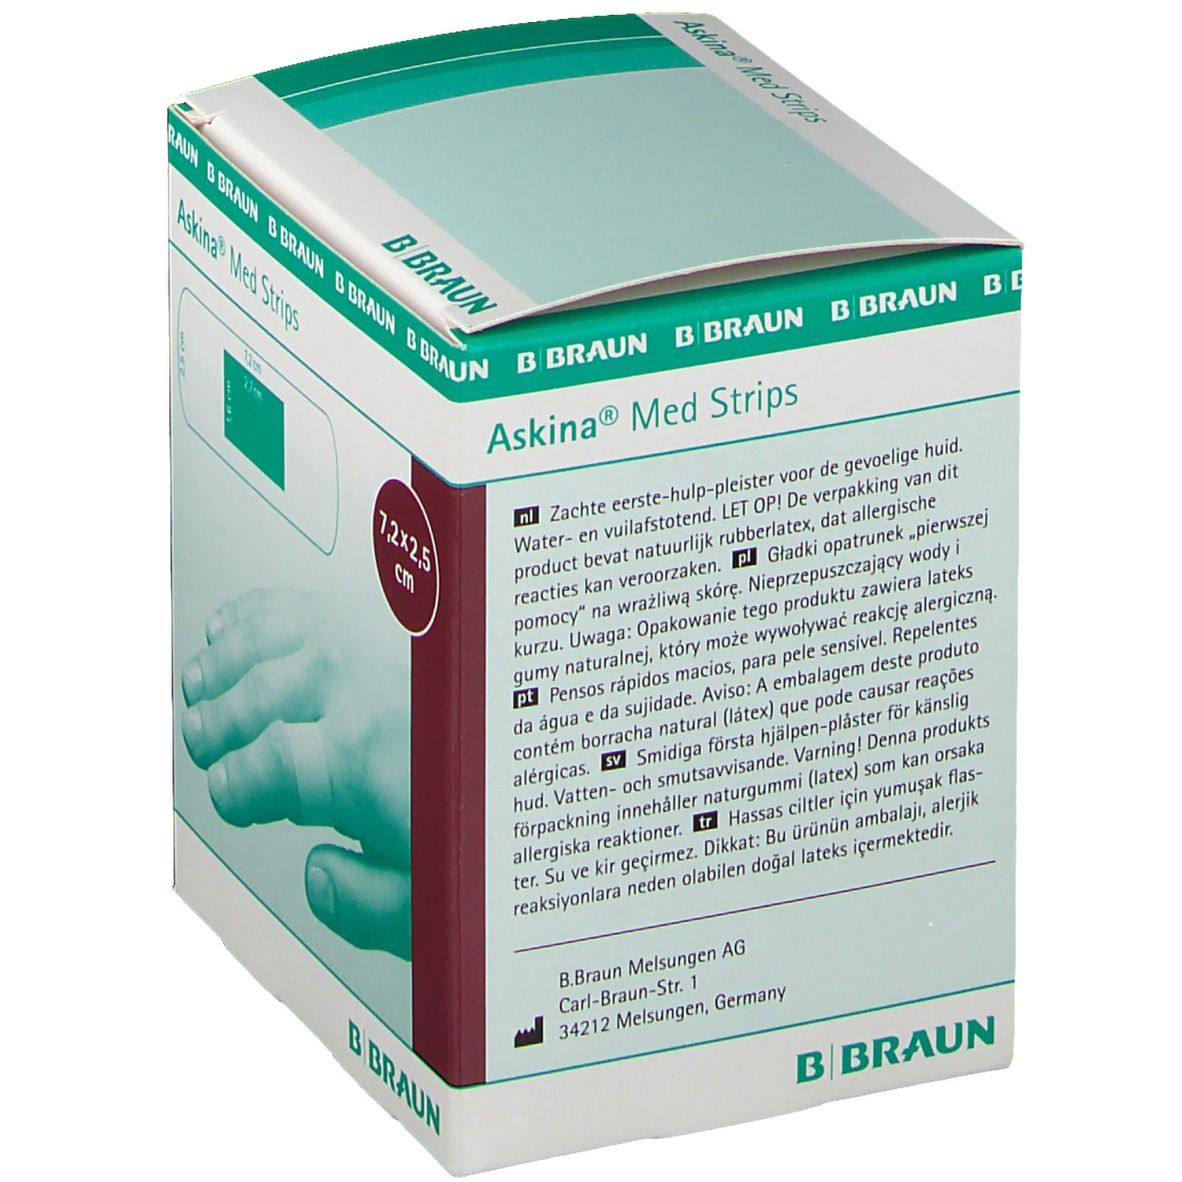 Askina® Med Strips 2,5 x 7,2 cm